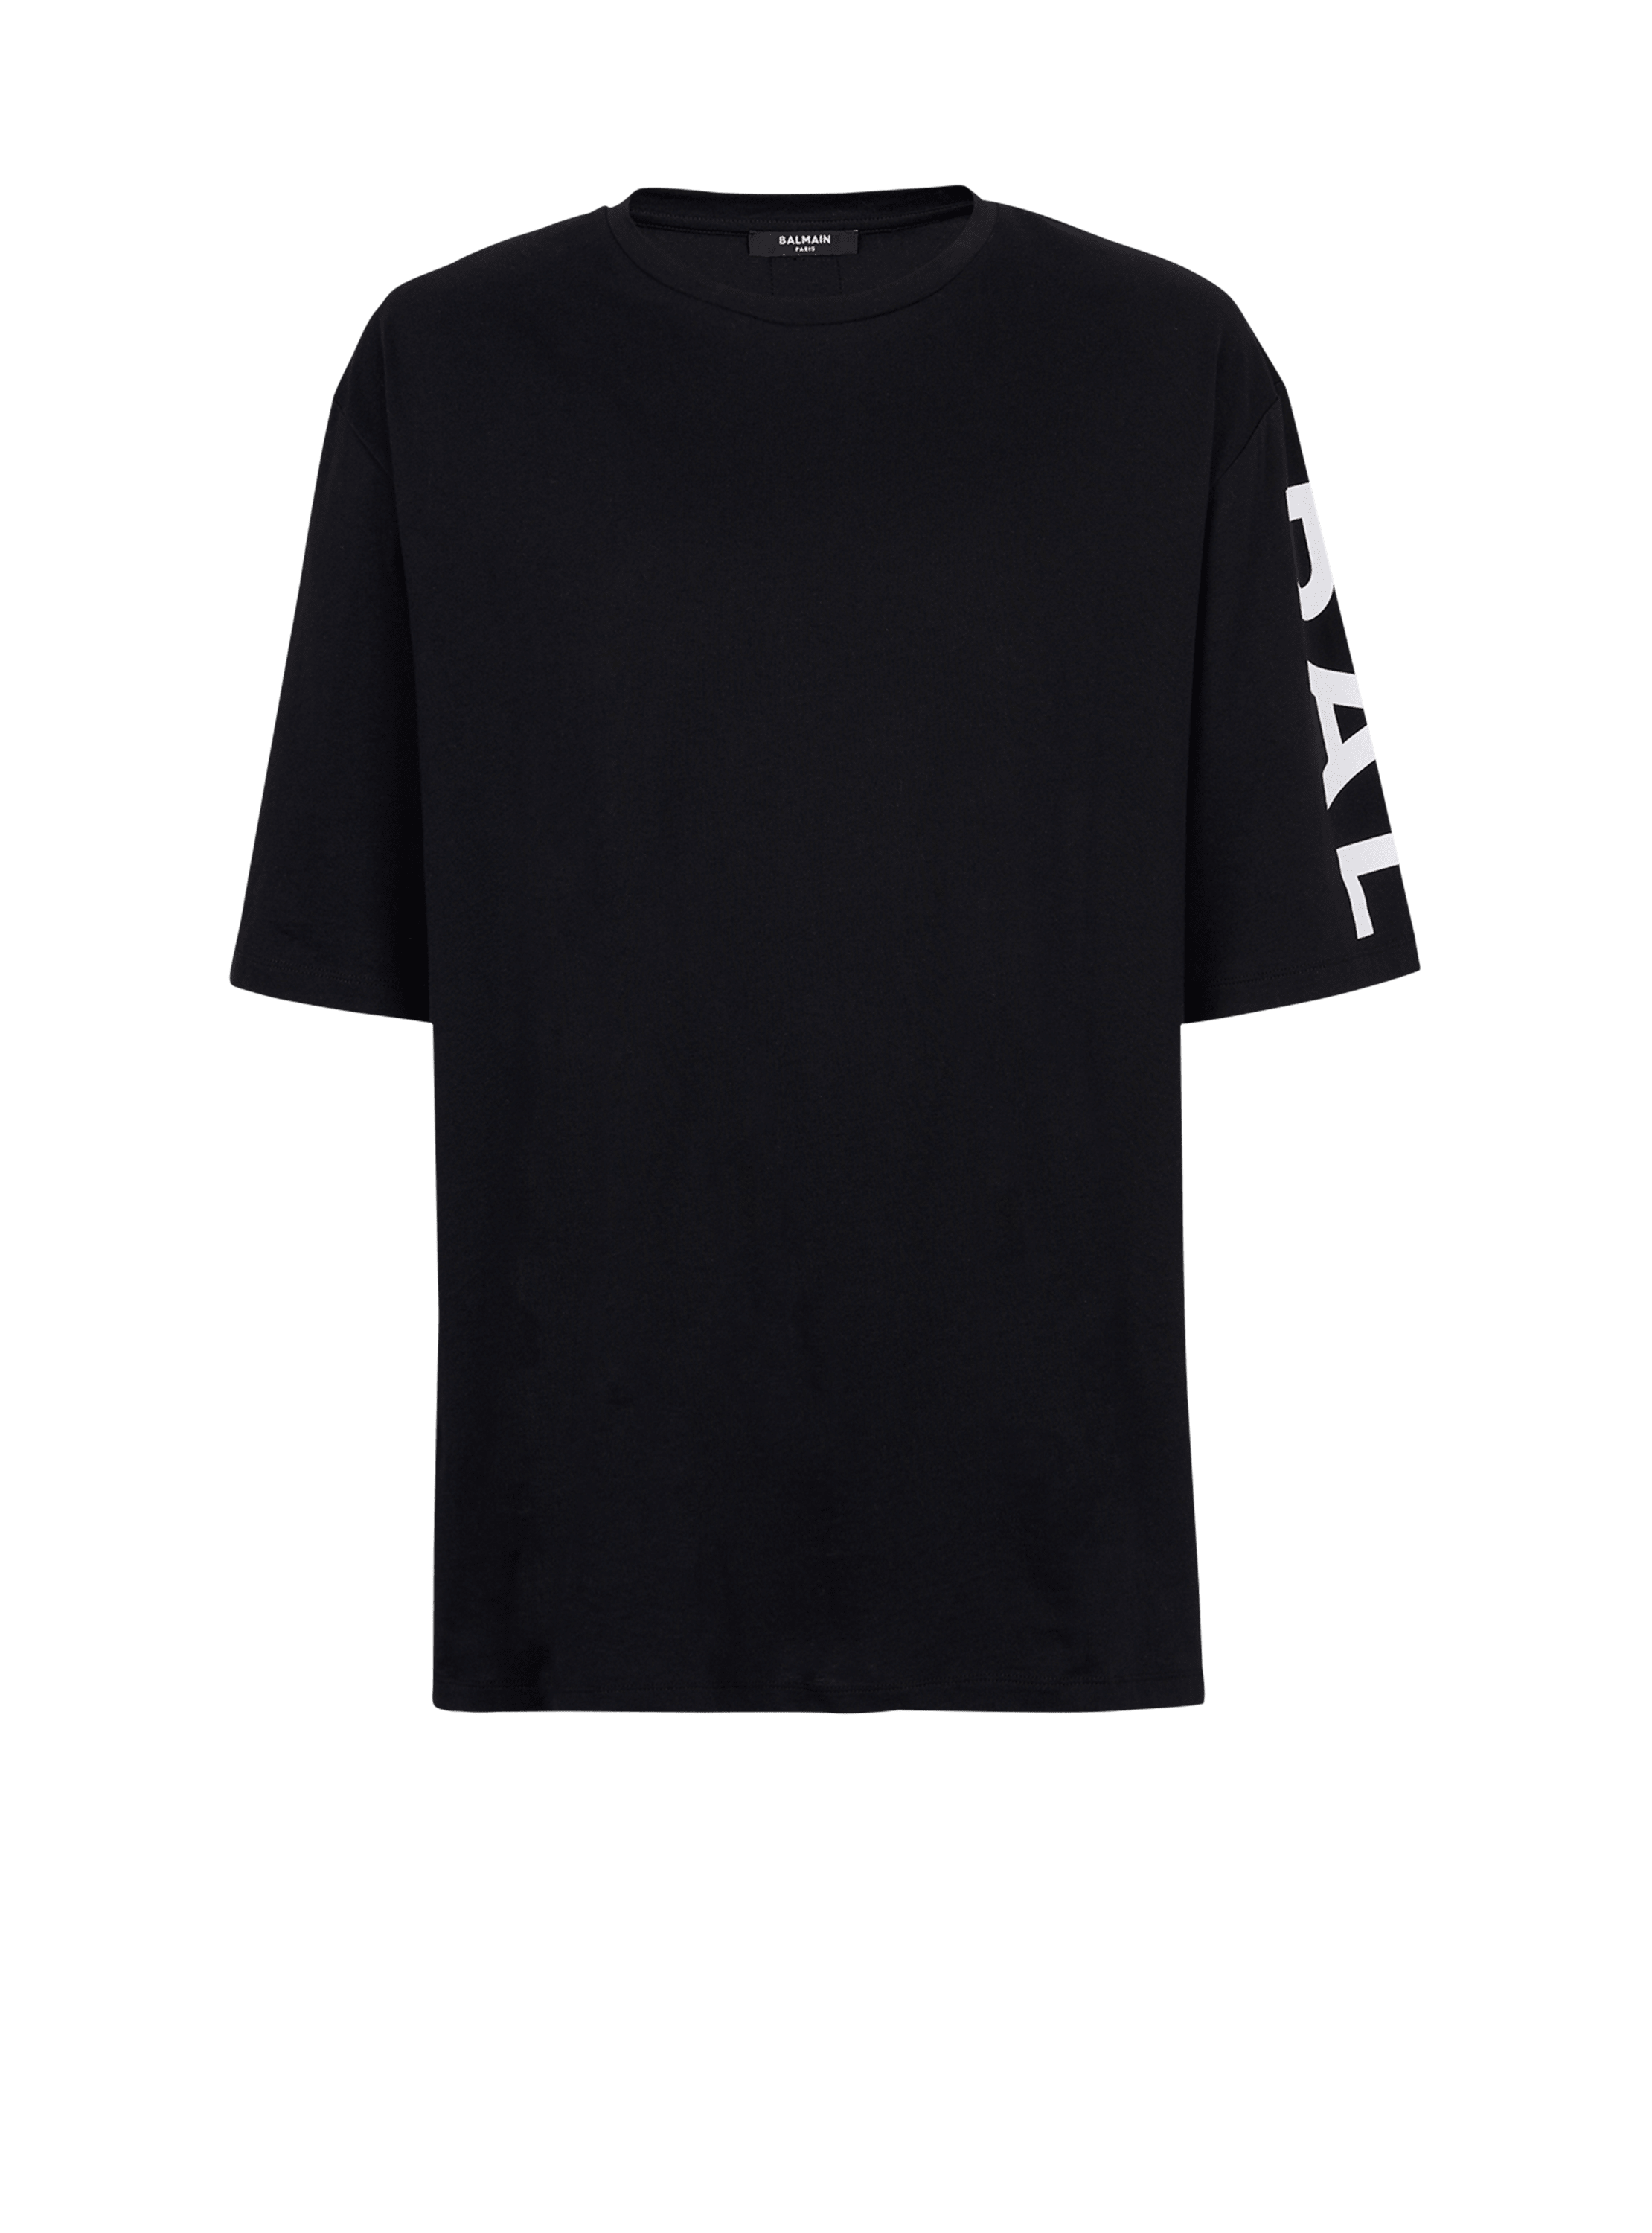 Oversized eco-designed cotton T-shirt with Balmain logo print, black, hi-res